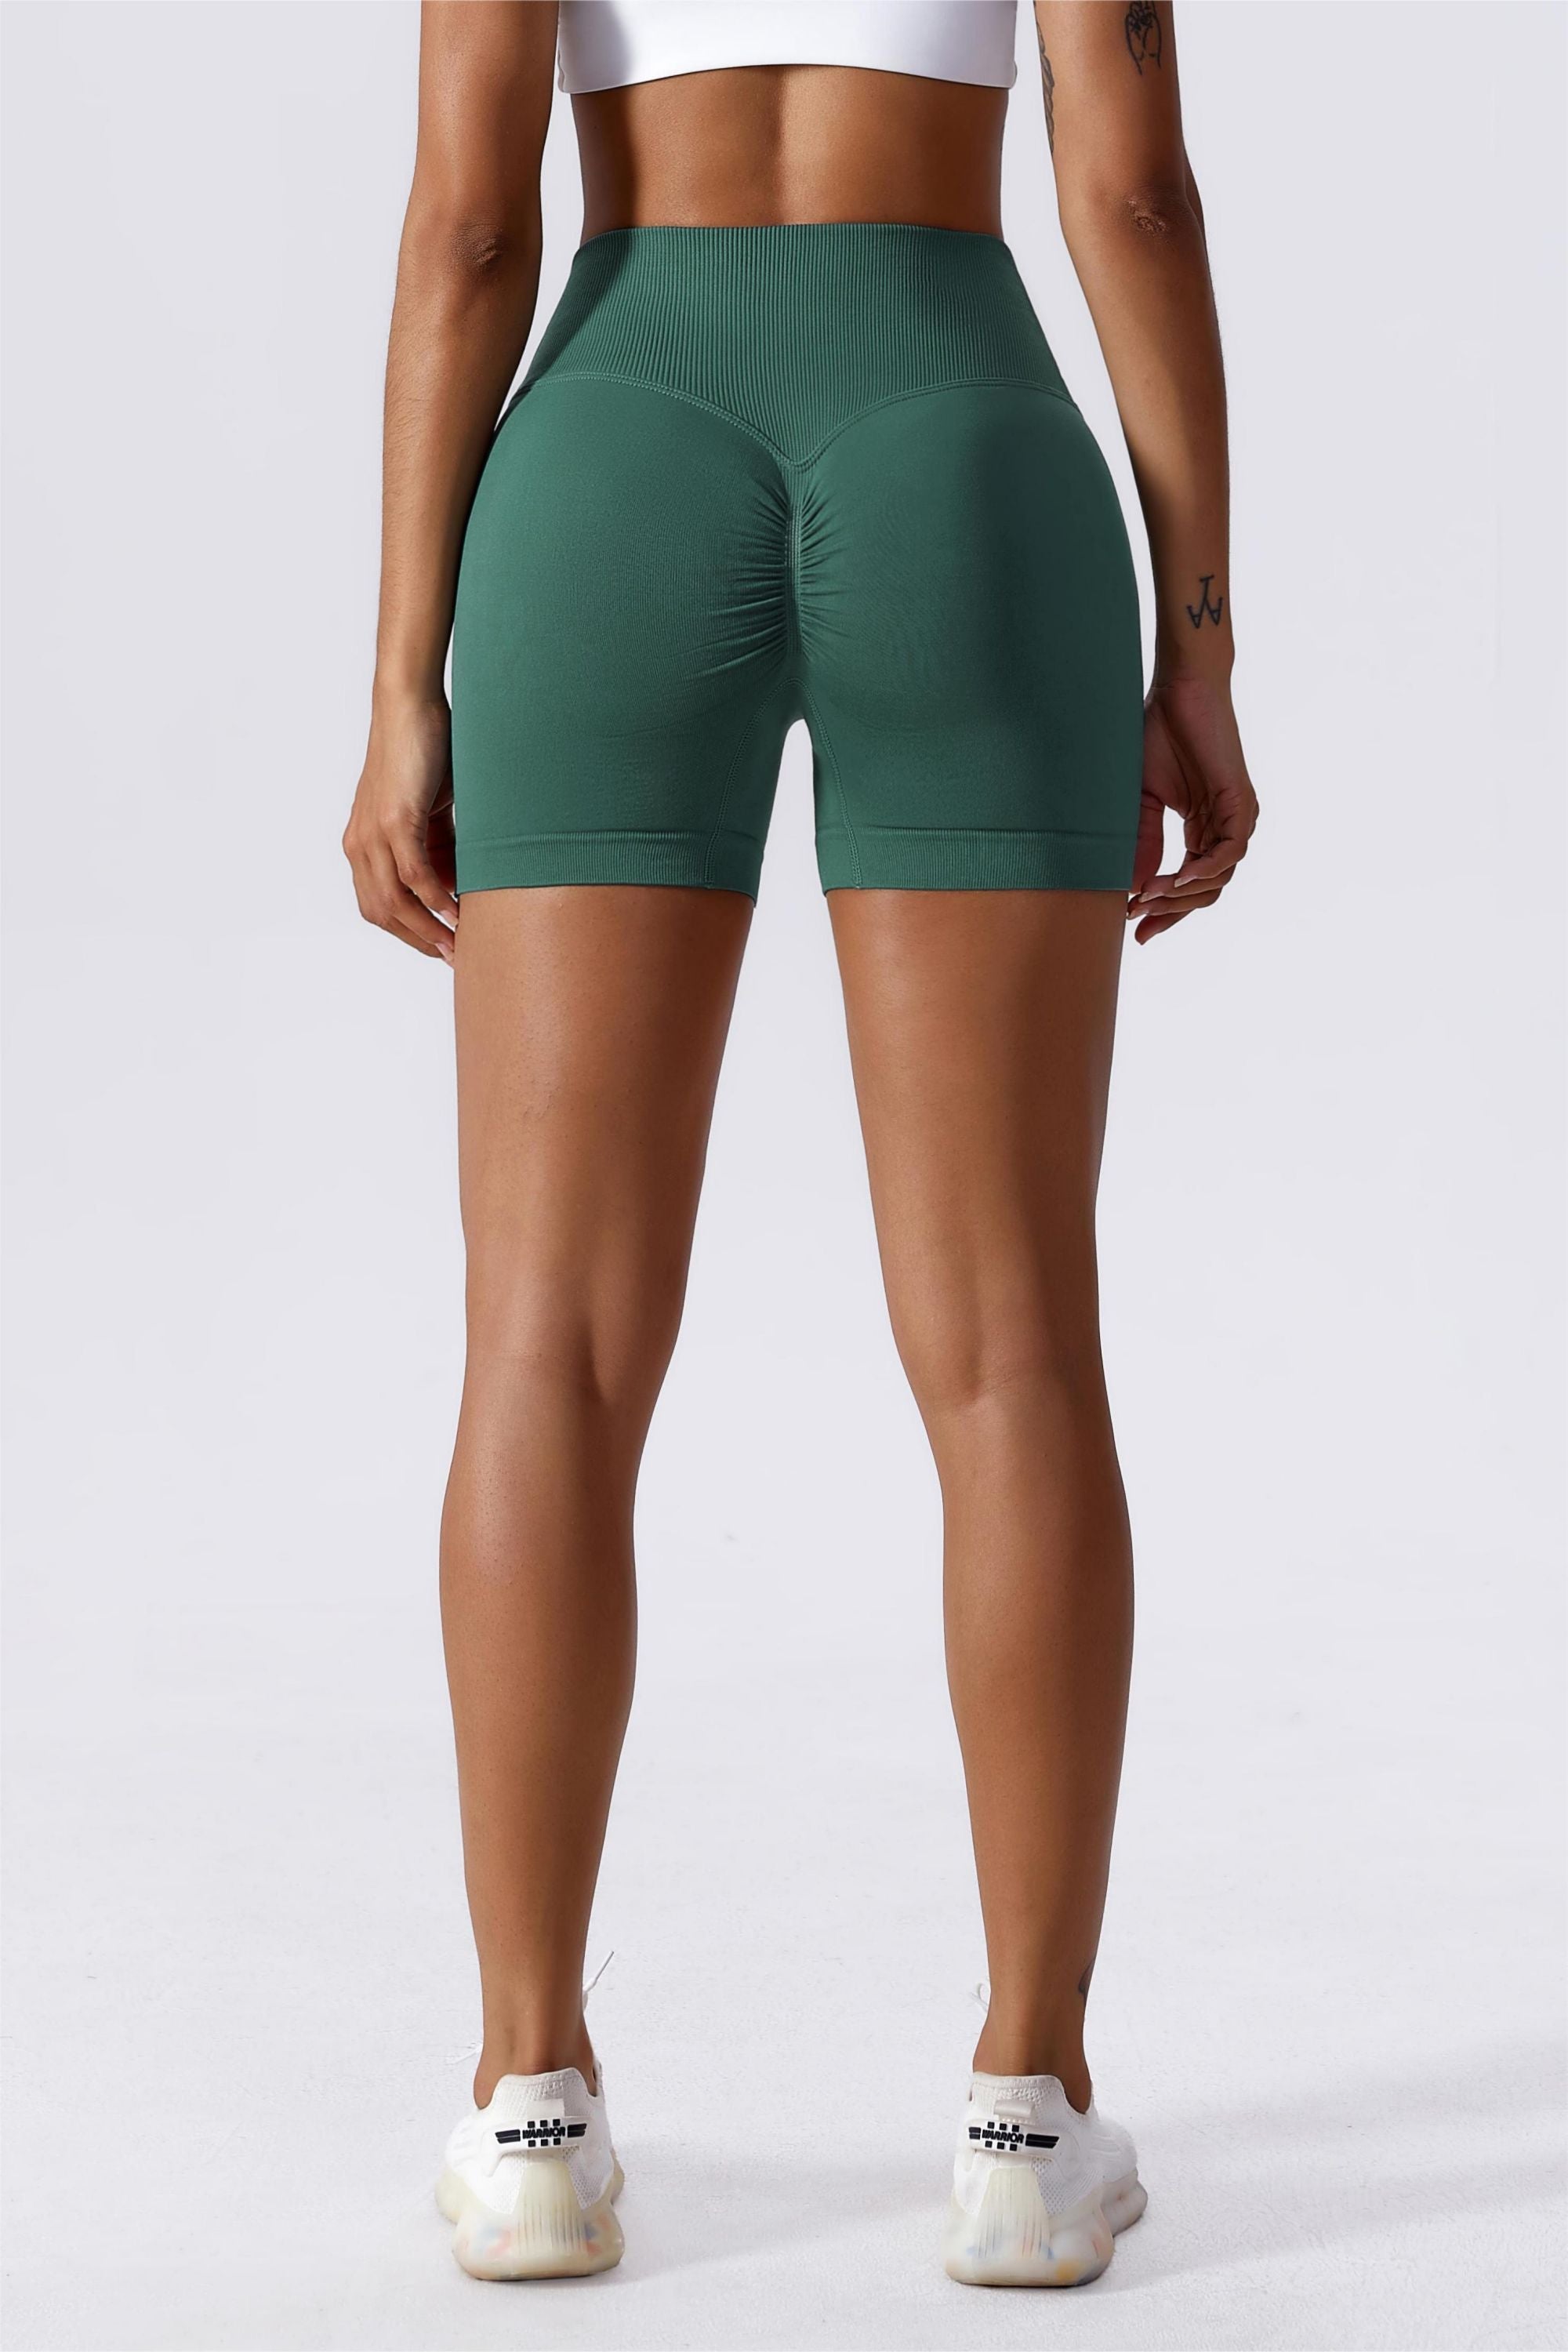 V-Cut Seamless Scrunch Butt Mini Shorts For Women – Zioccie